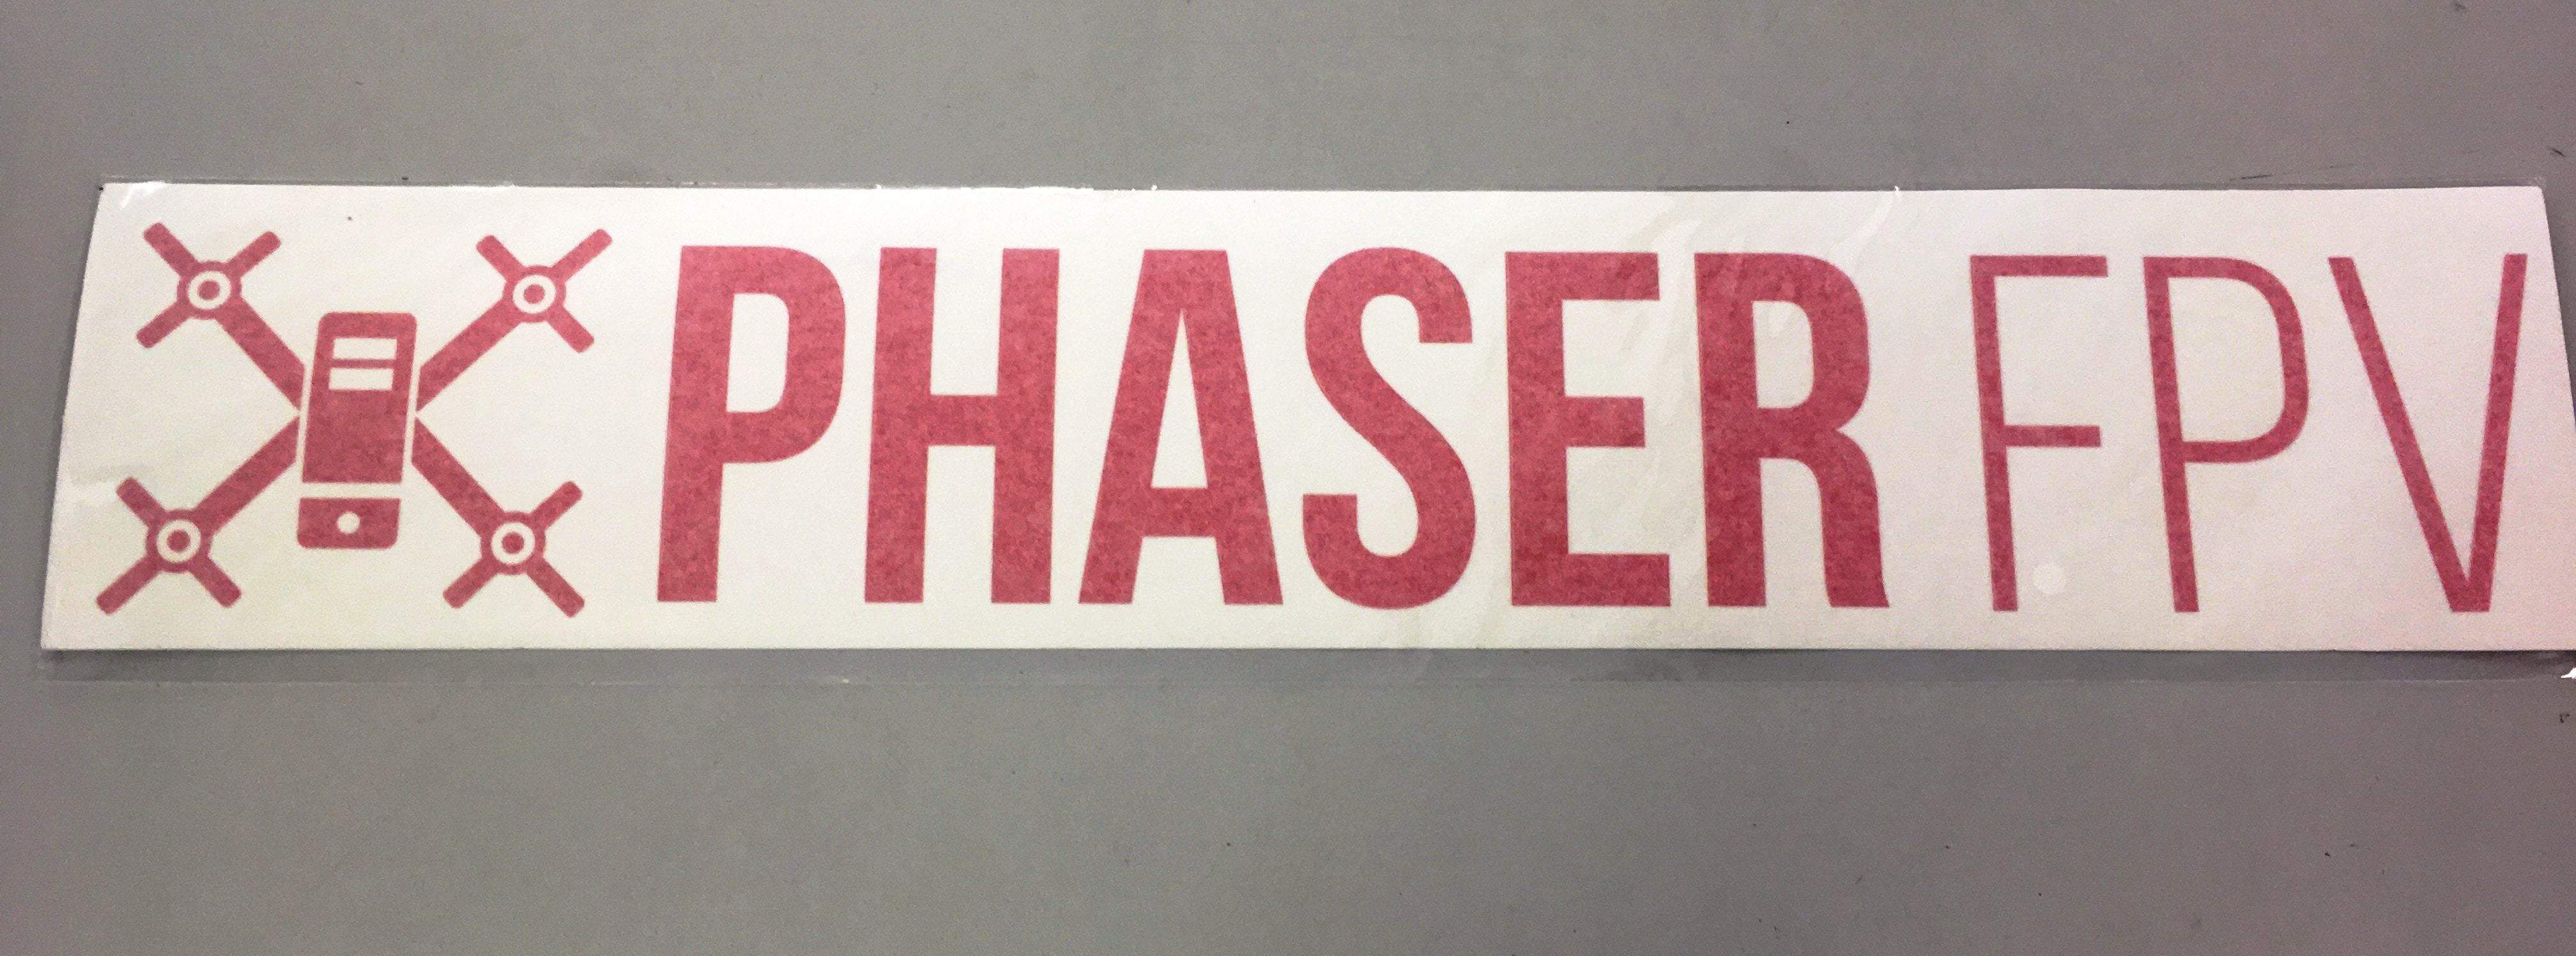 Phaser FPV Transfer Stickers 625mmx120mm